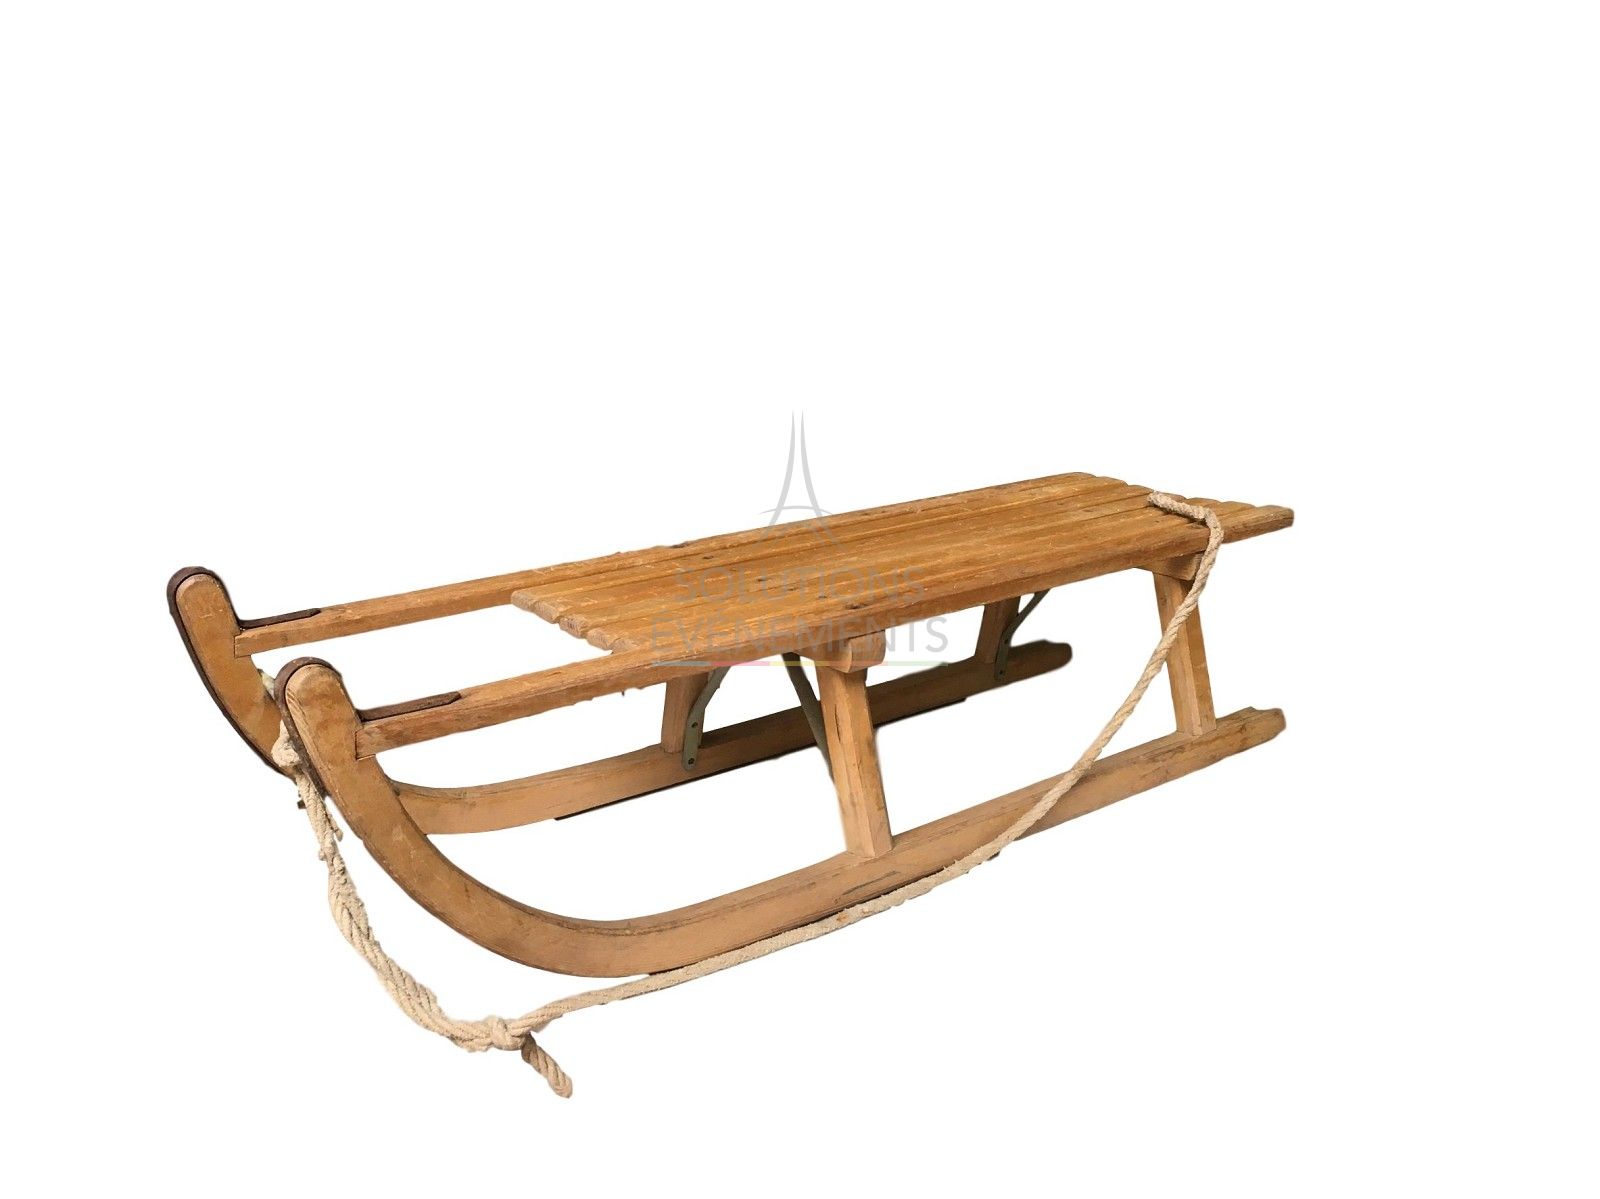 Decorative wooden sled rental